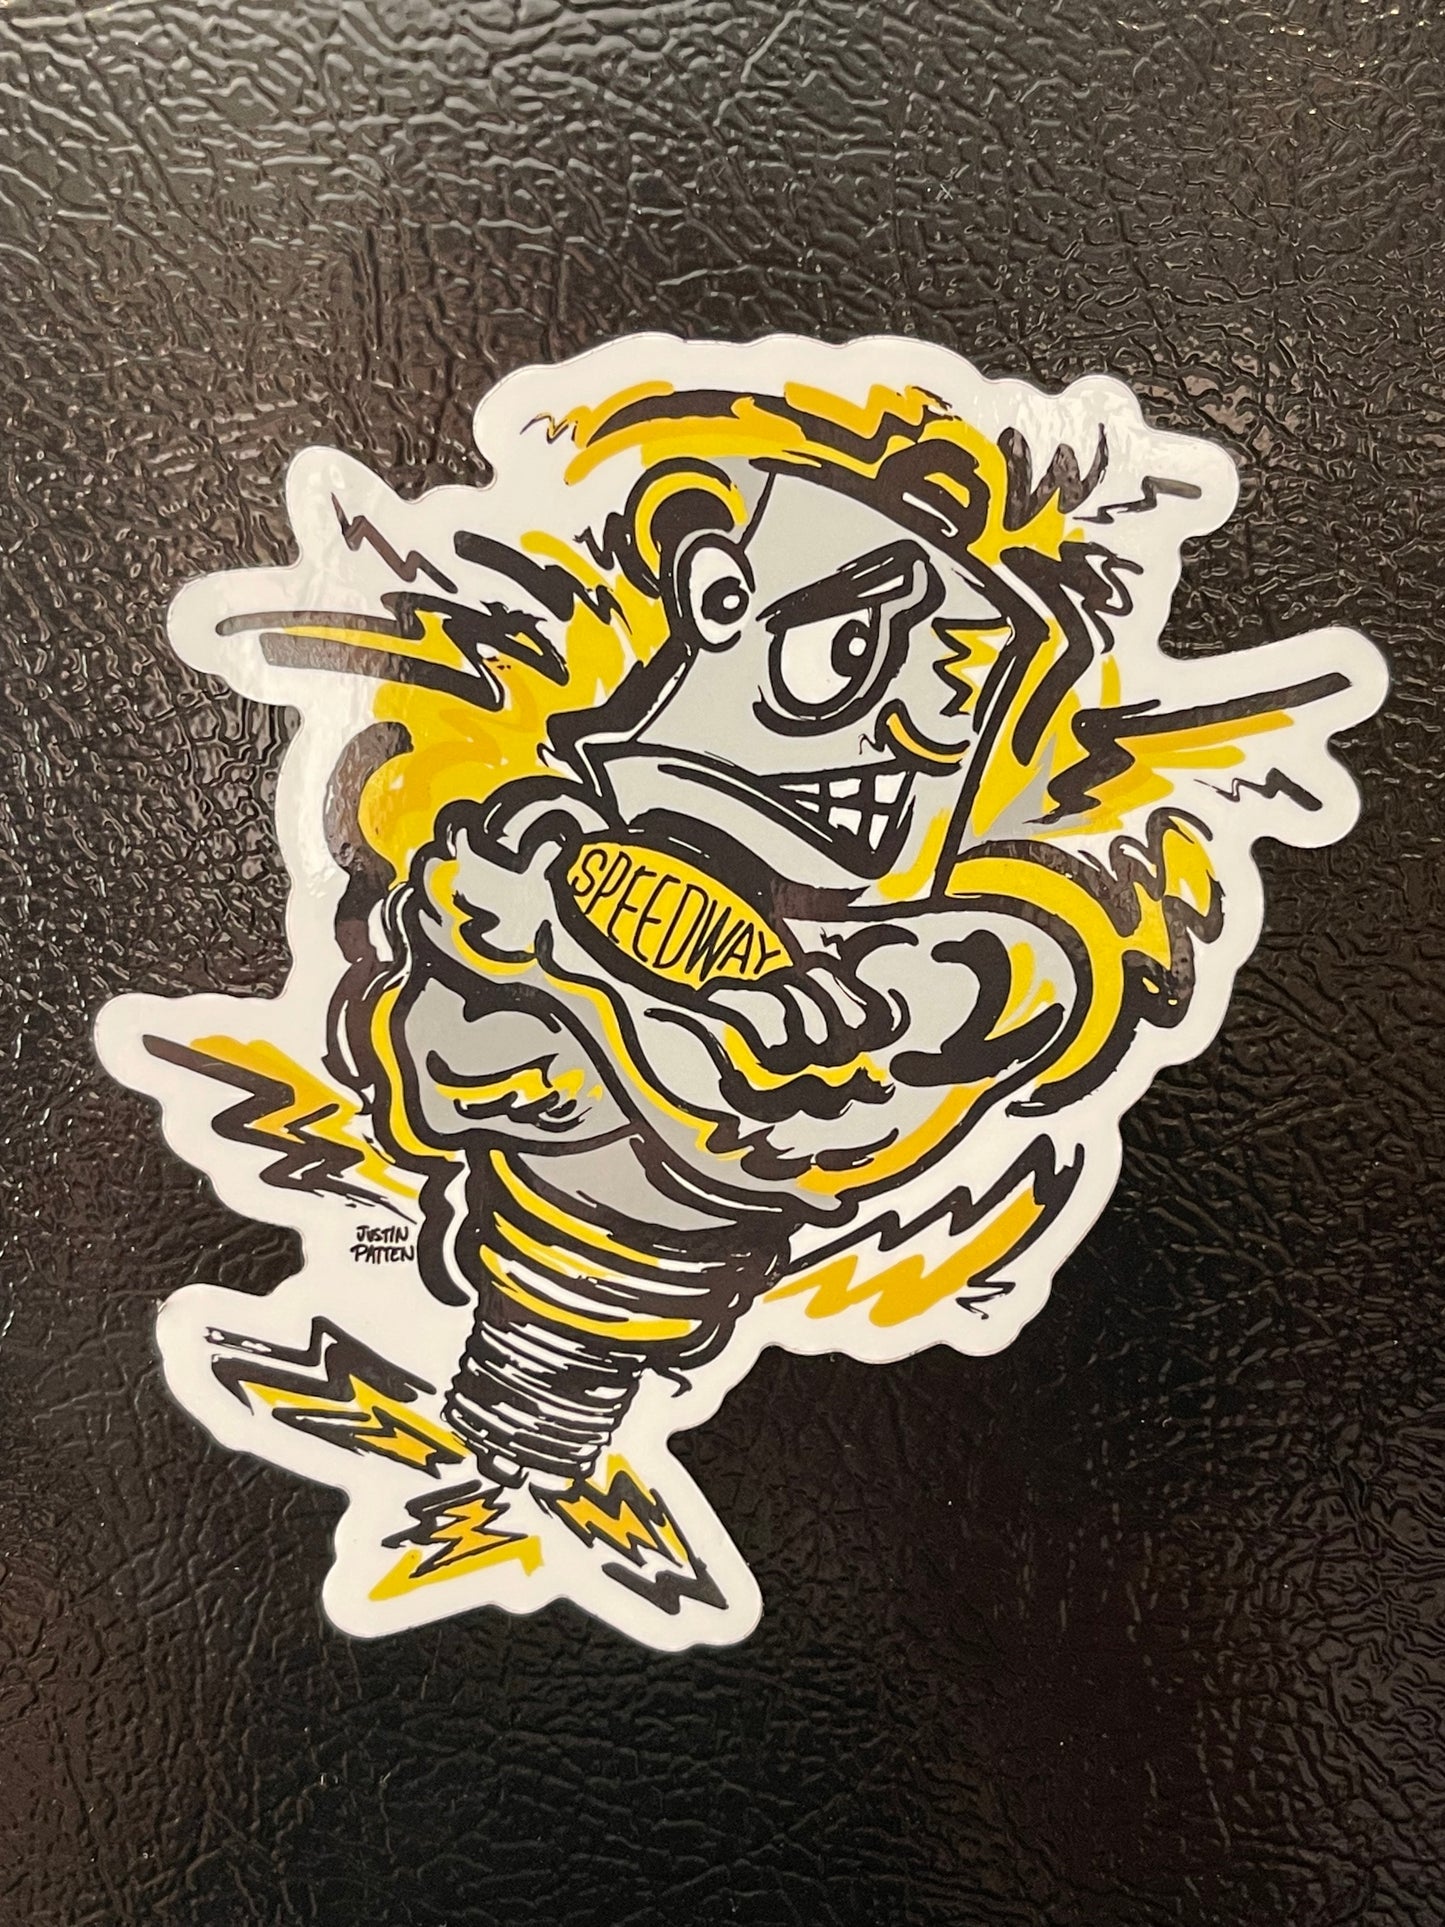 Speedway Sparkplug Mascot Magnet by Justin Patten